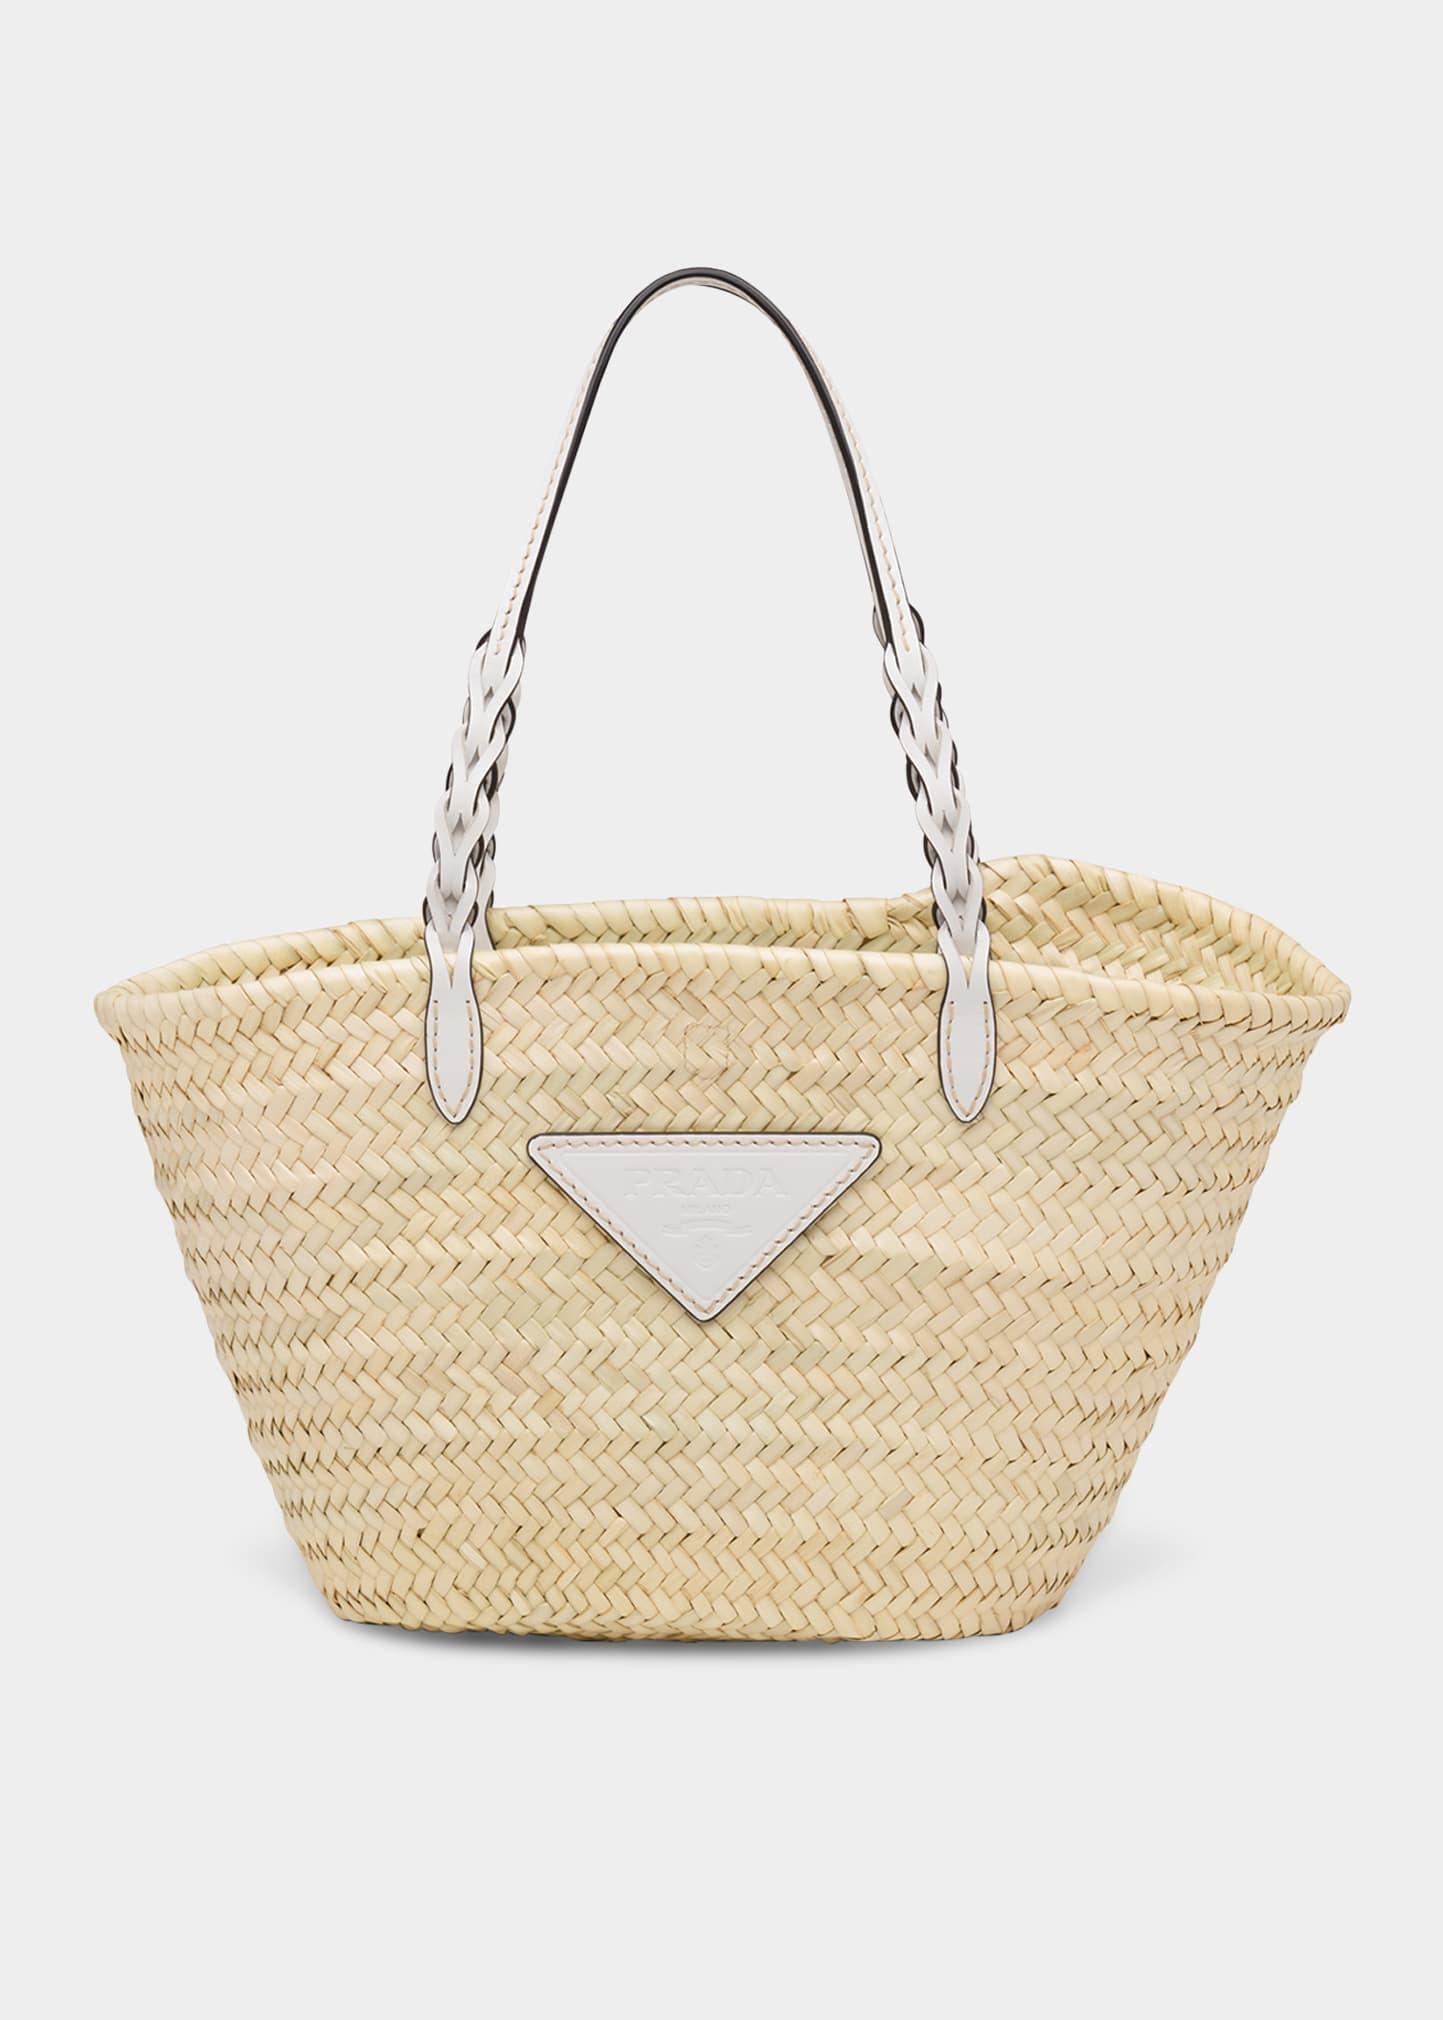 Prada Woven Straw Basket Tote Bag in Natural | Lyst